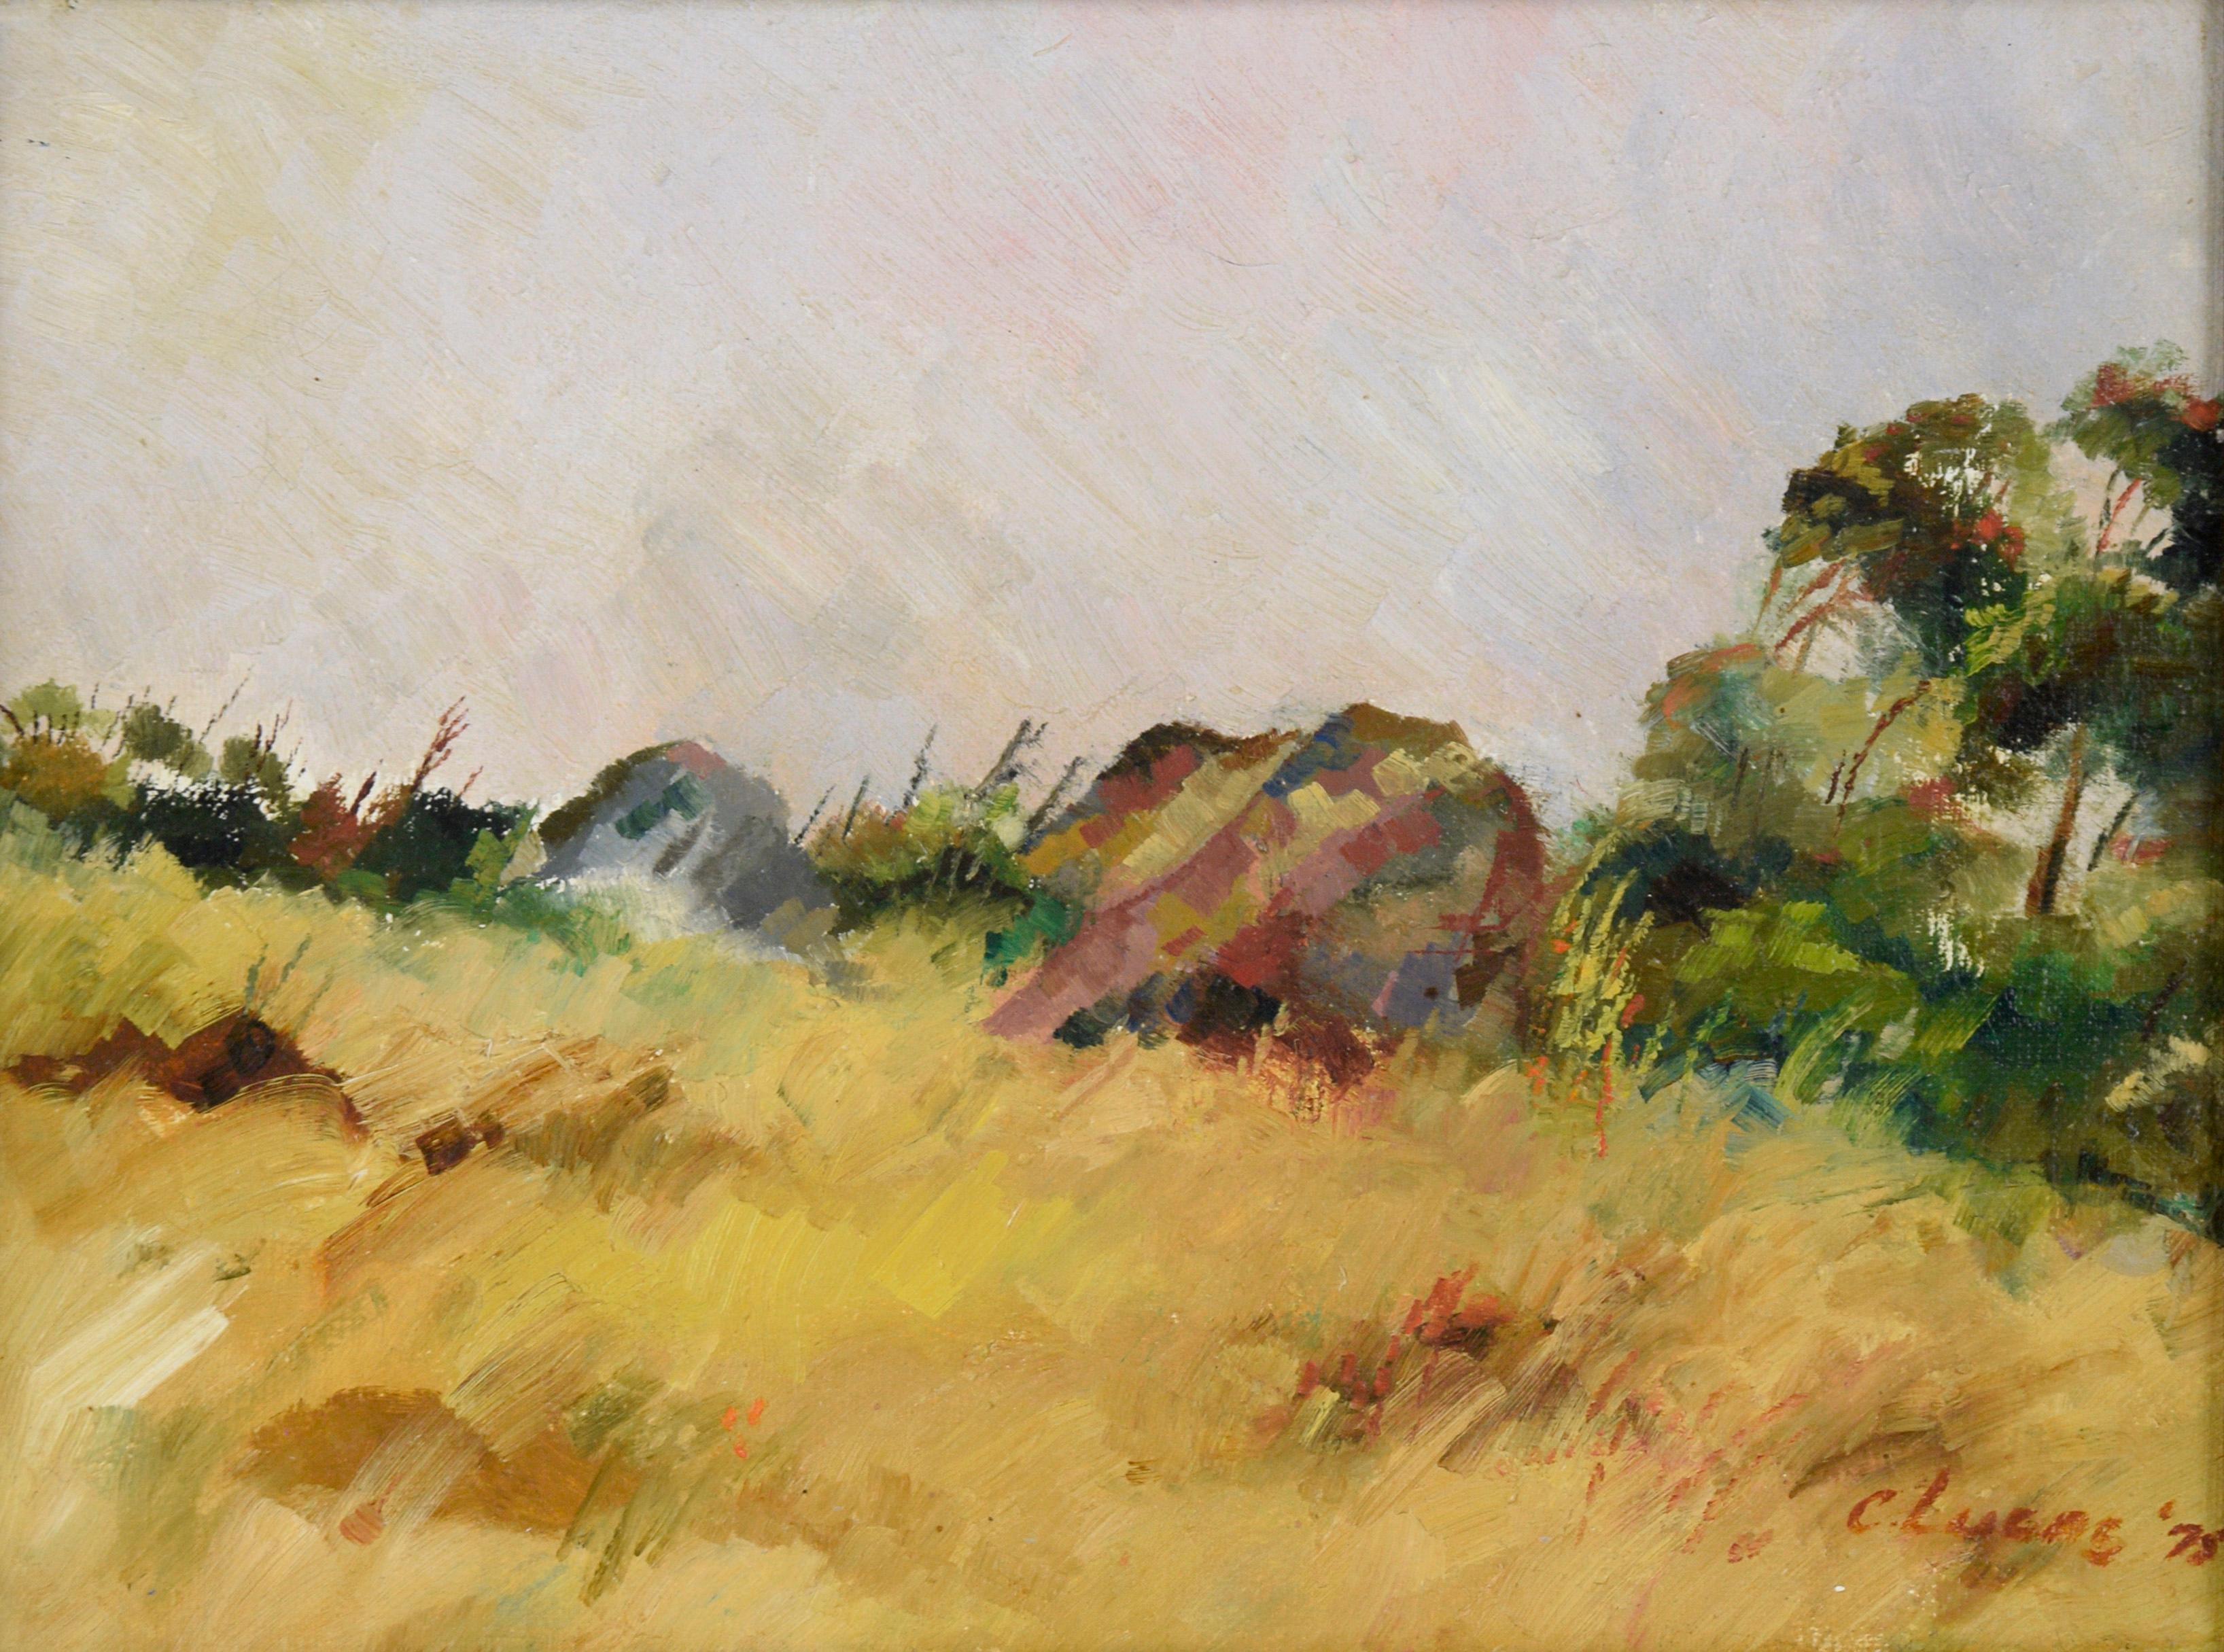 Golden Field Plein Aire Landscape in Oil on Linen - Painting by C. Lucas